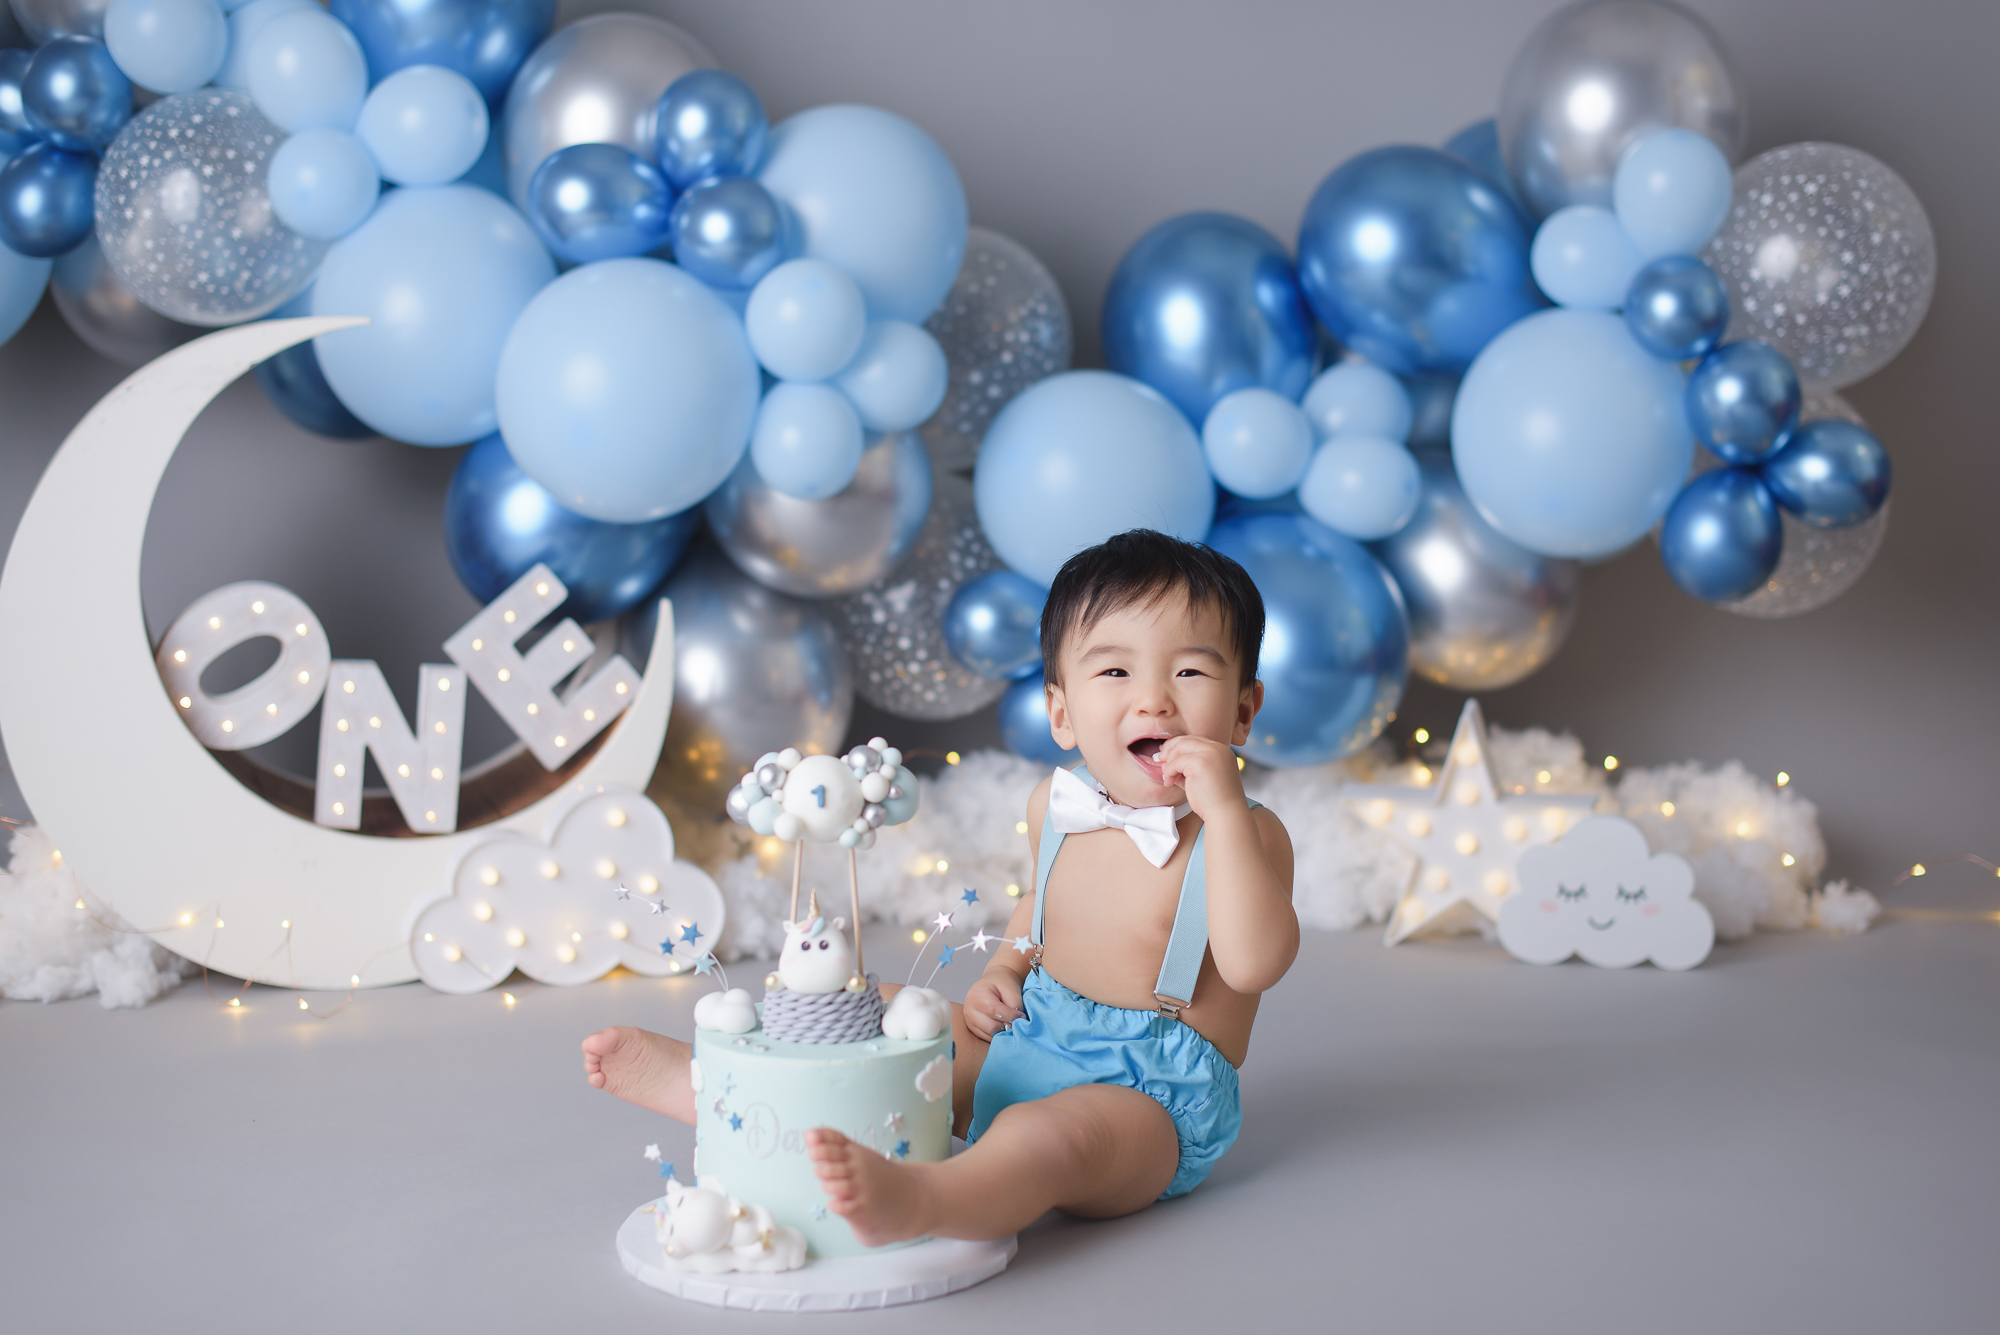 Amanda Dams Photography Cake Smash Blue Sky Balloon Garland Baby Smiling